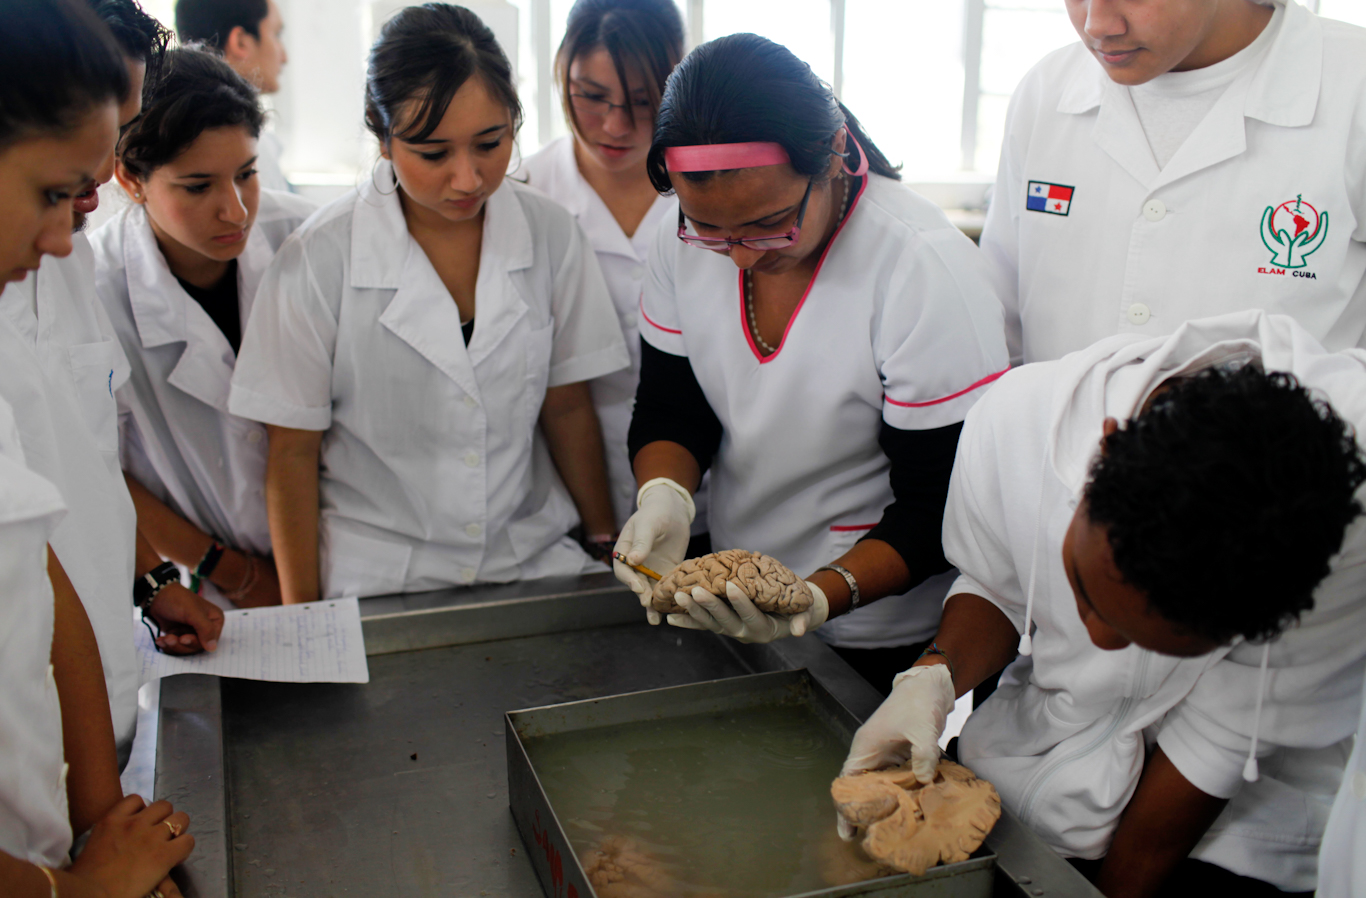 Escuela de medicina de Cuba